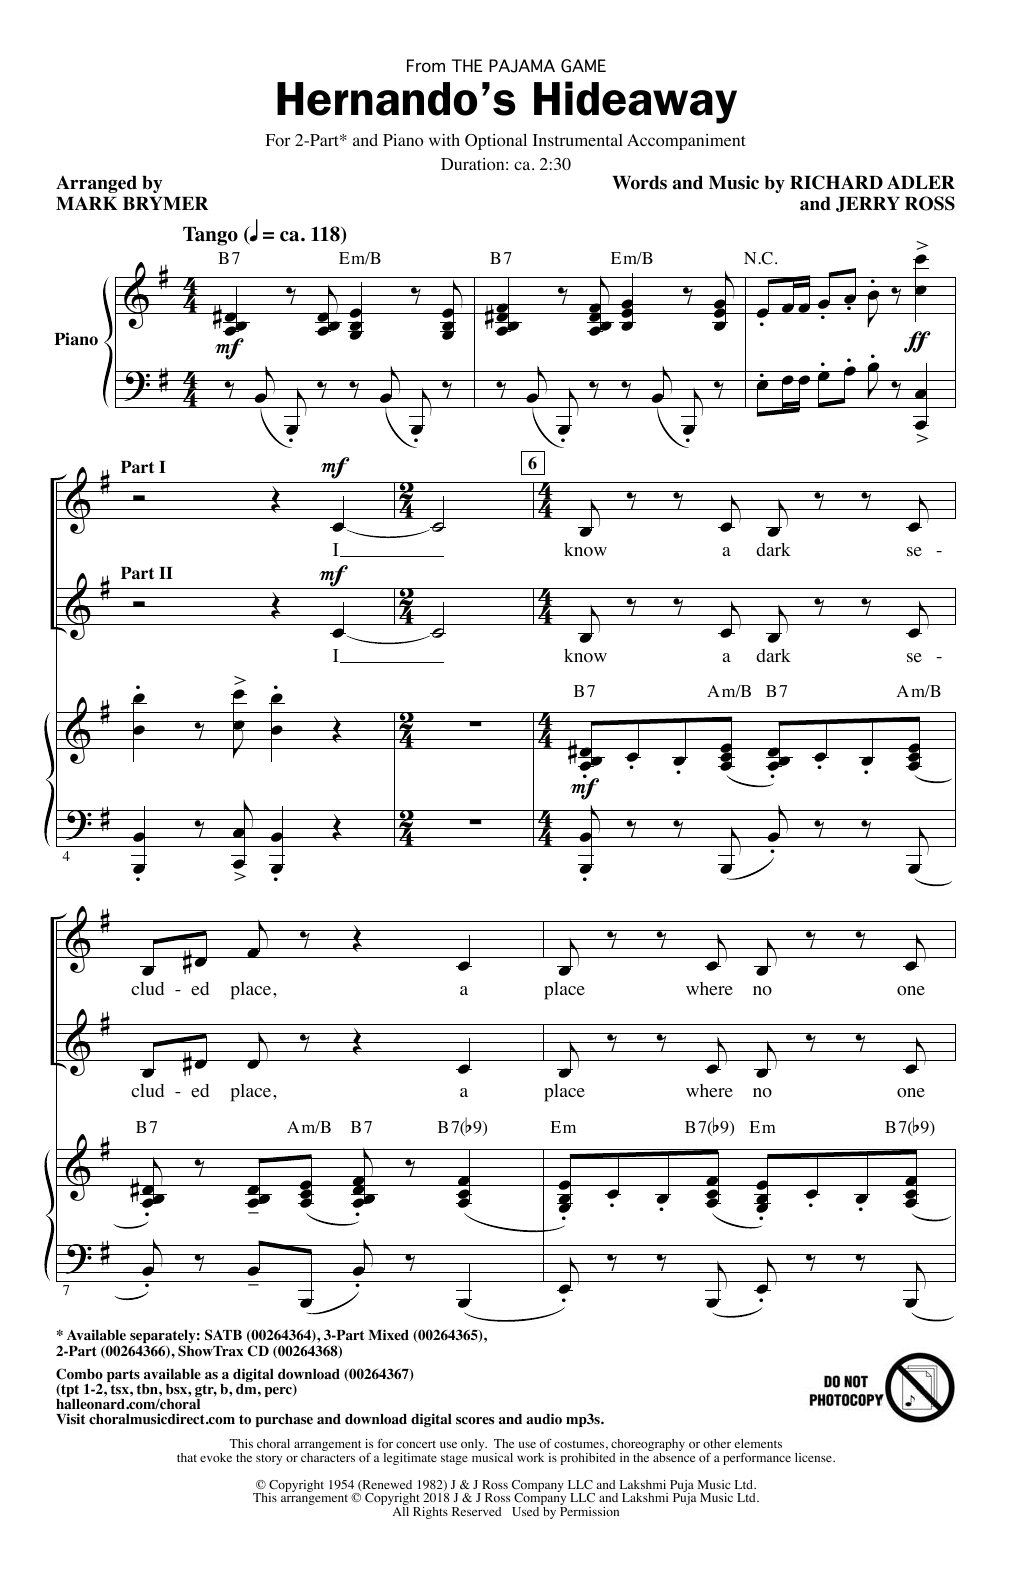 Richard Adler Hernando's Hideaway (arr. Mark Brymer) Sheet Music Notes & Chords for 2-Part Choir - Download or Print PDF